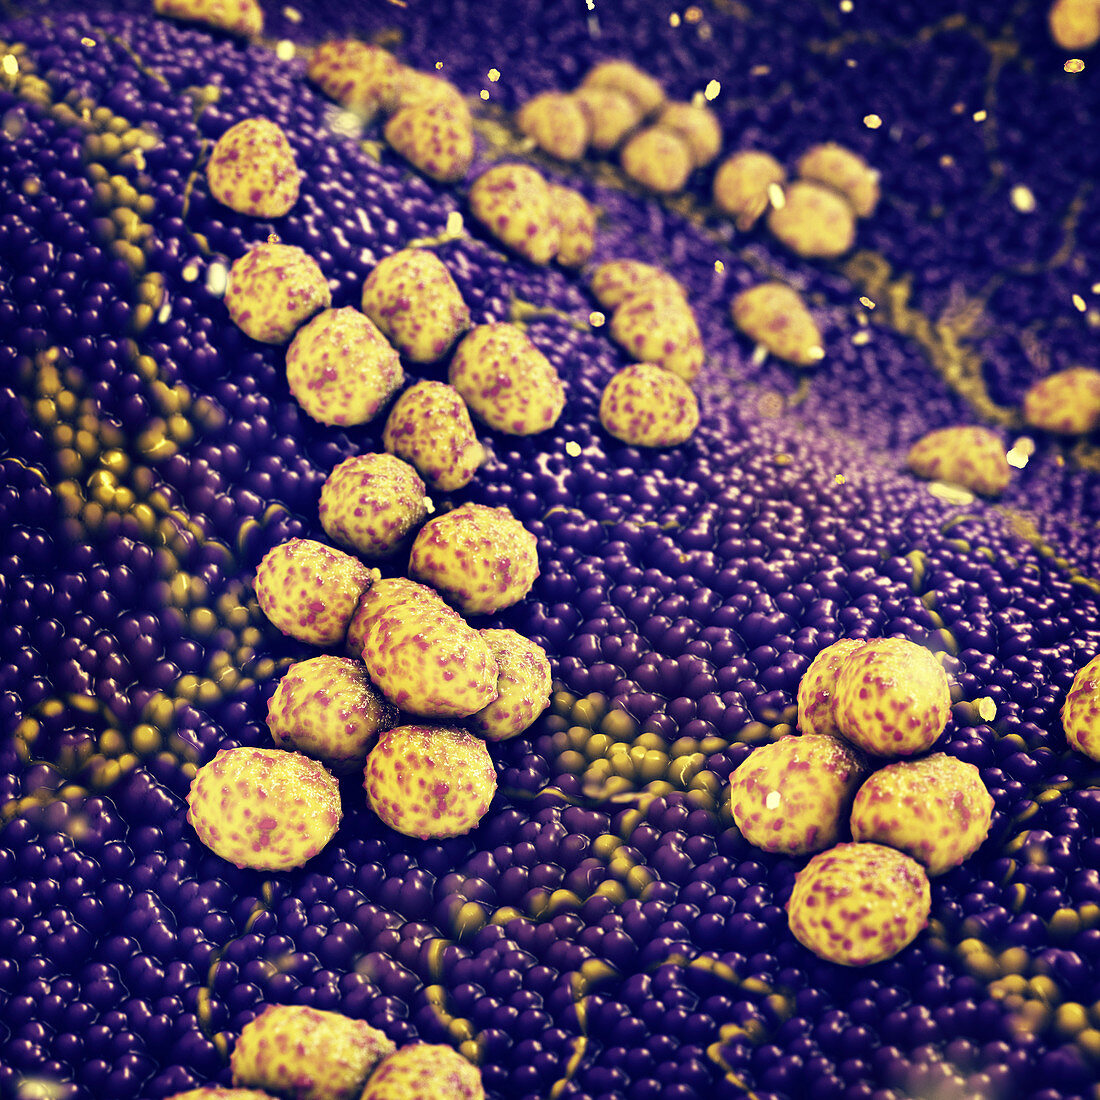 Staphylococcus aureus bacteria, illustration